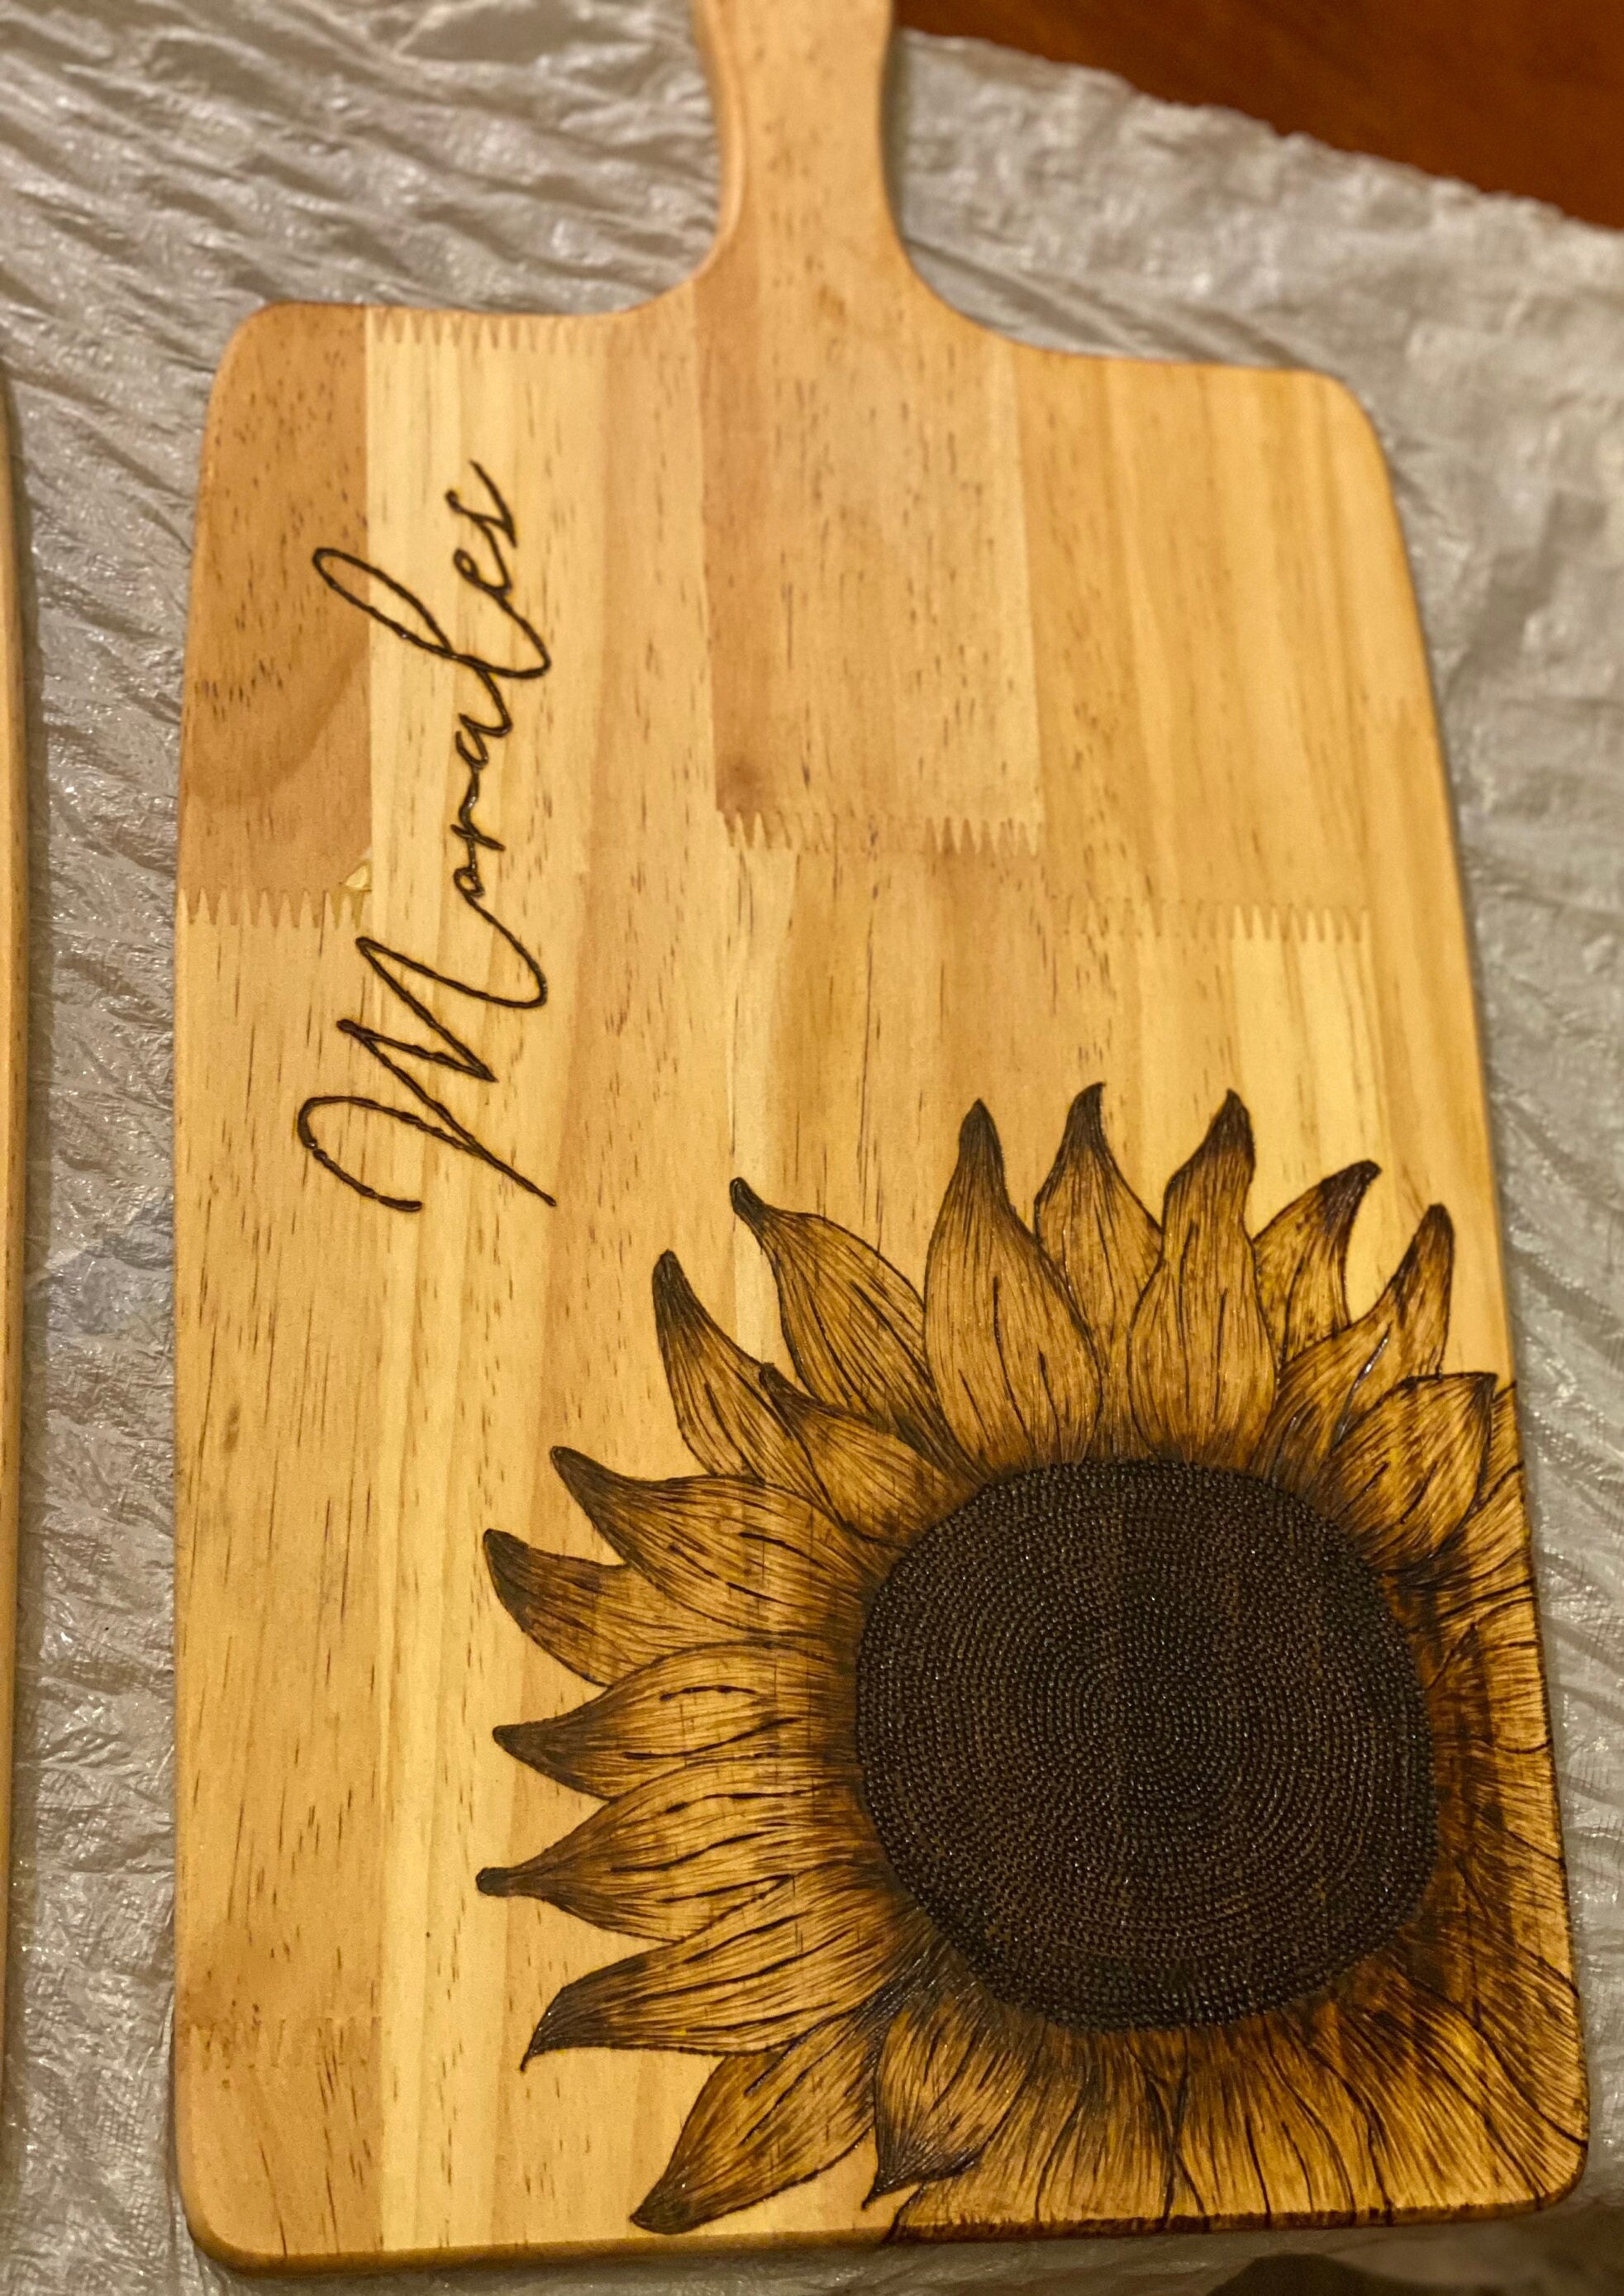 Sunflowers Cutting Board